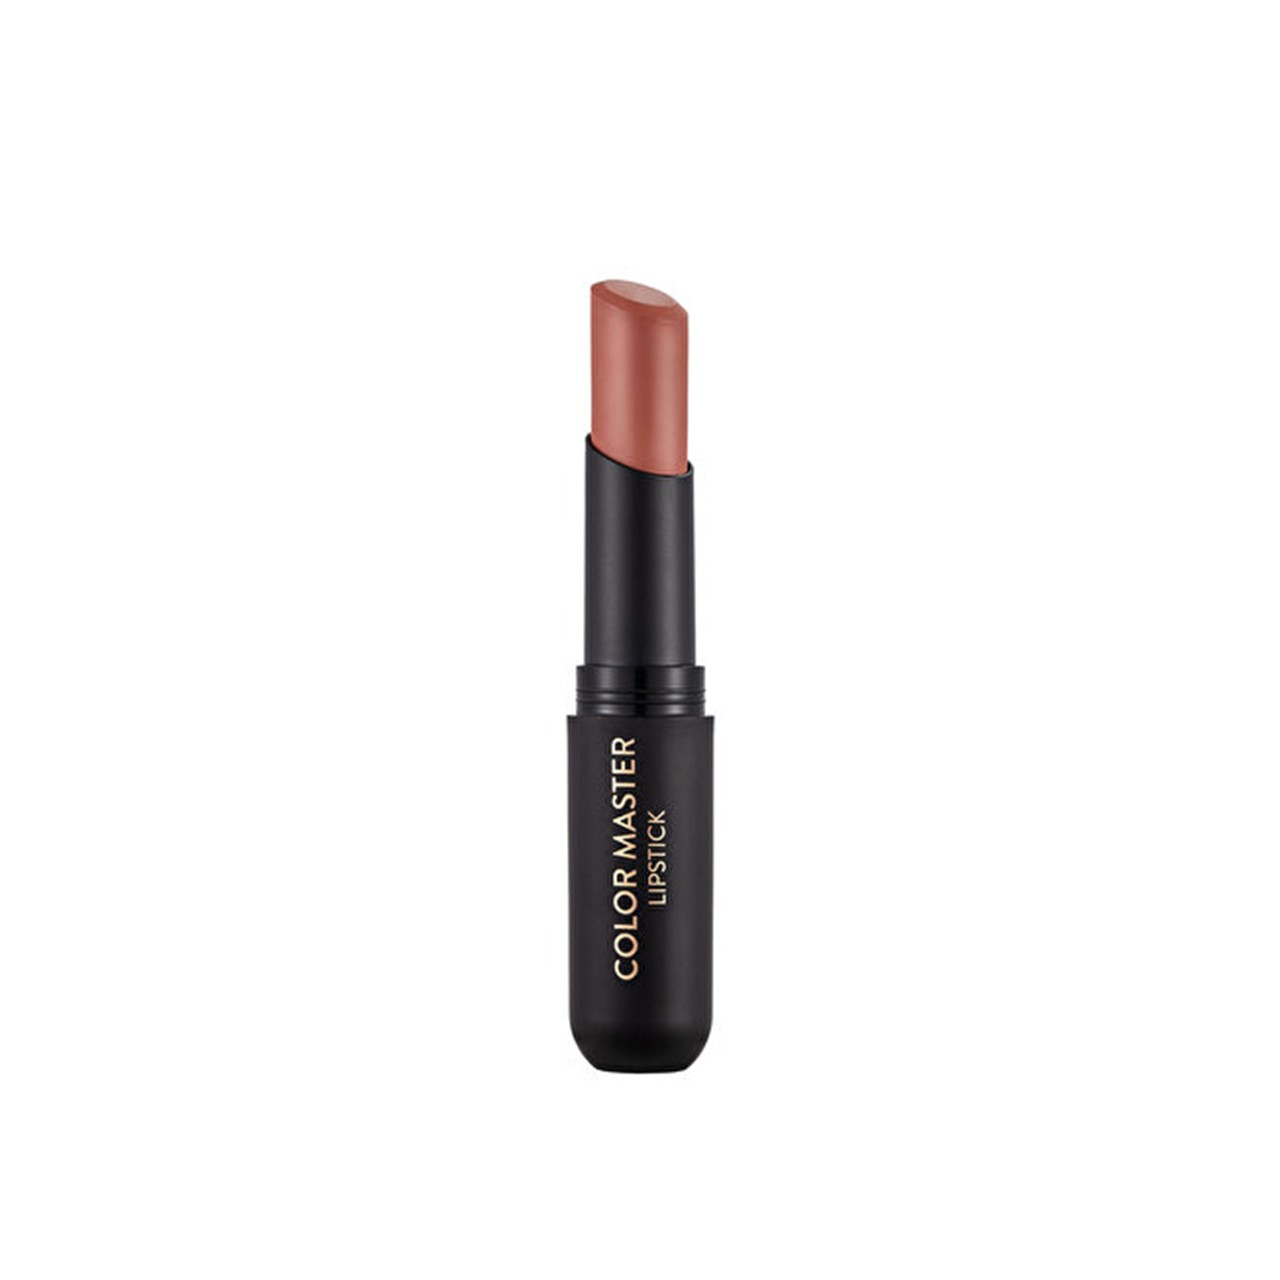 Flormar Color Master Lipstick 02 Delicate Peach 3g (0.11oz)